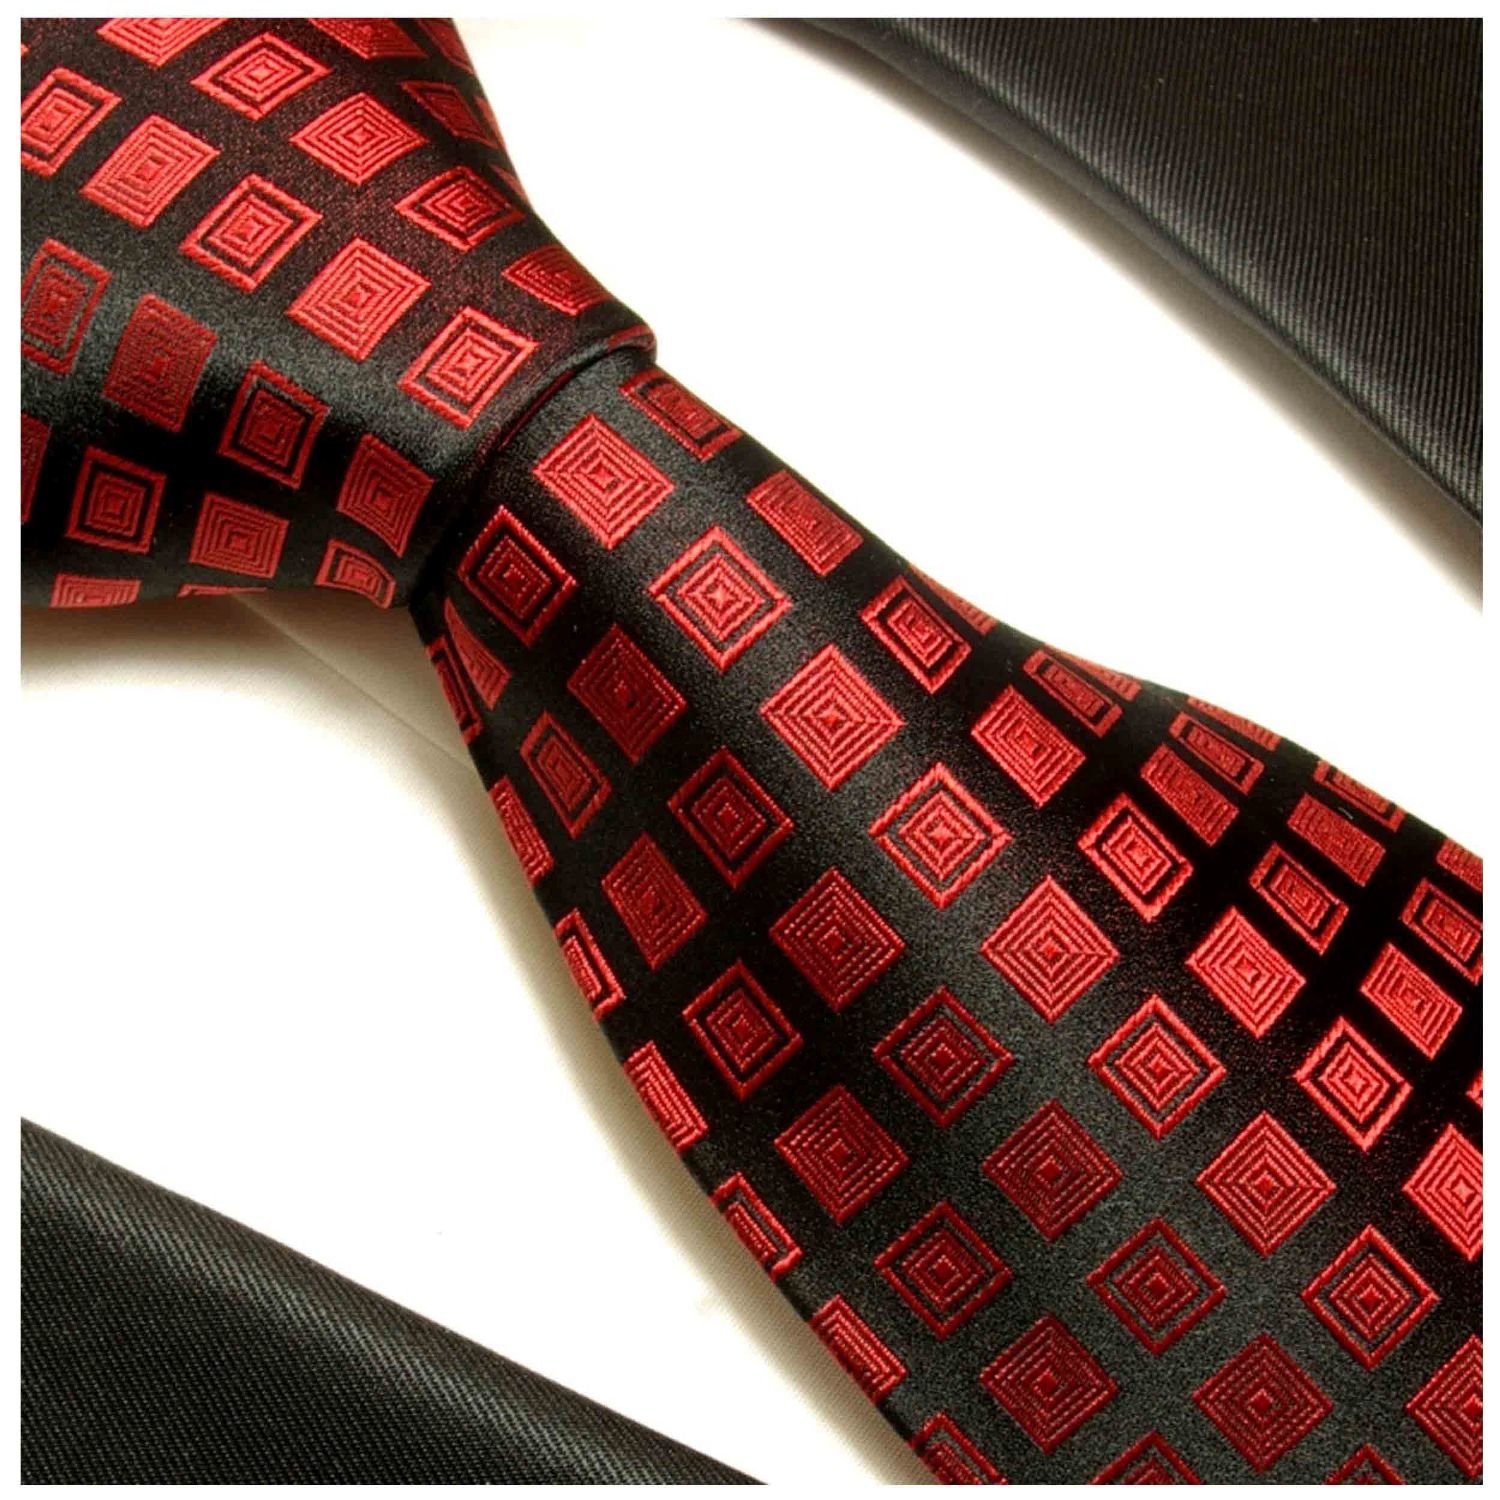 Paul Malone Krawatte Designer Seidenkrawatte schwarz Schlips Schmal 764 modern rot 100% Herren (6cm), kariert Seide